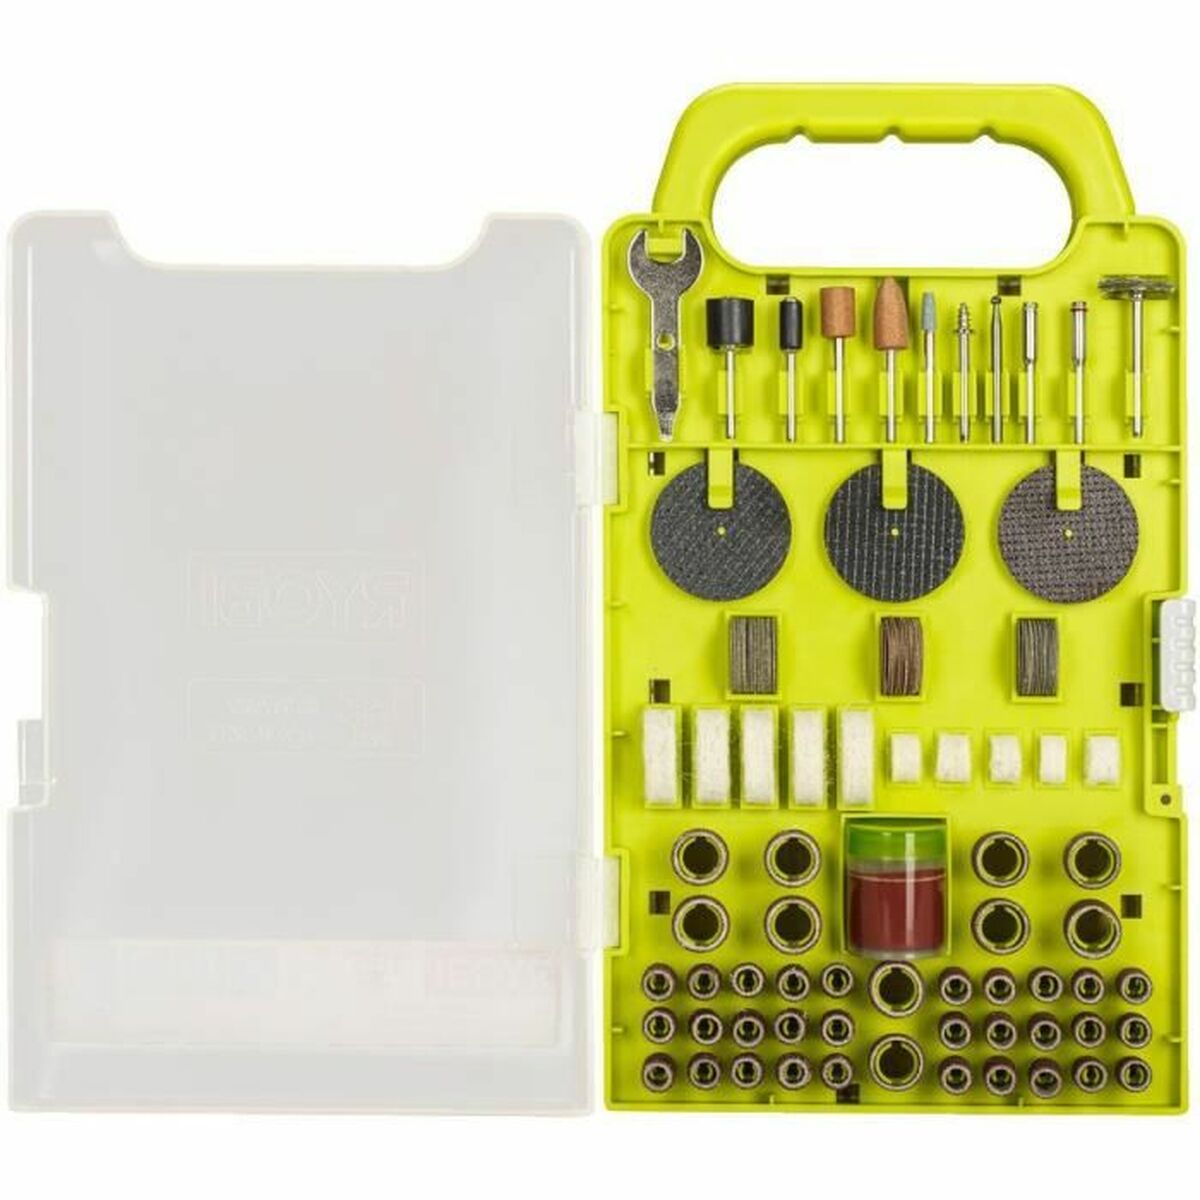 Multi-tool accessory set Ryobi RAKRT155 115 Onderdelen